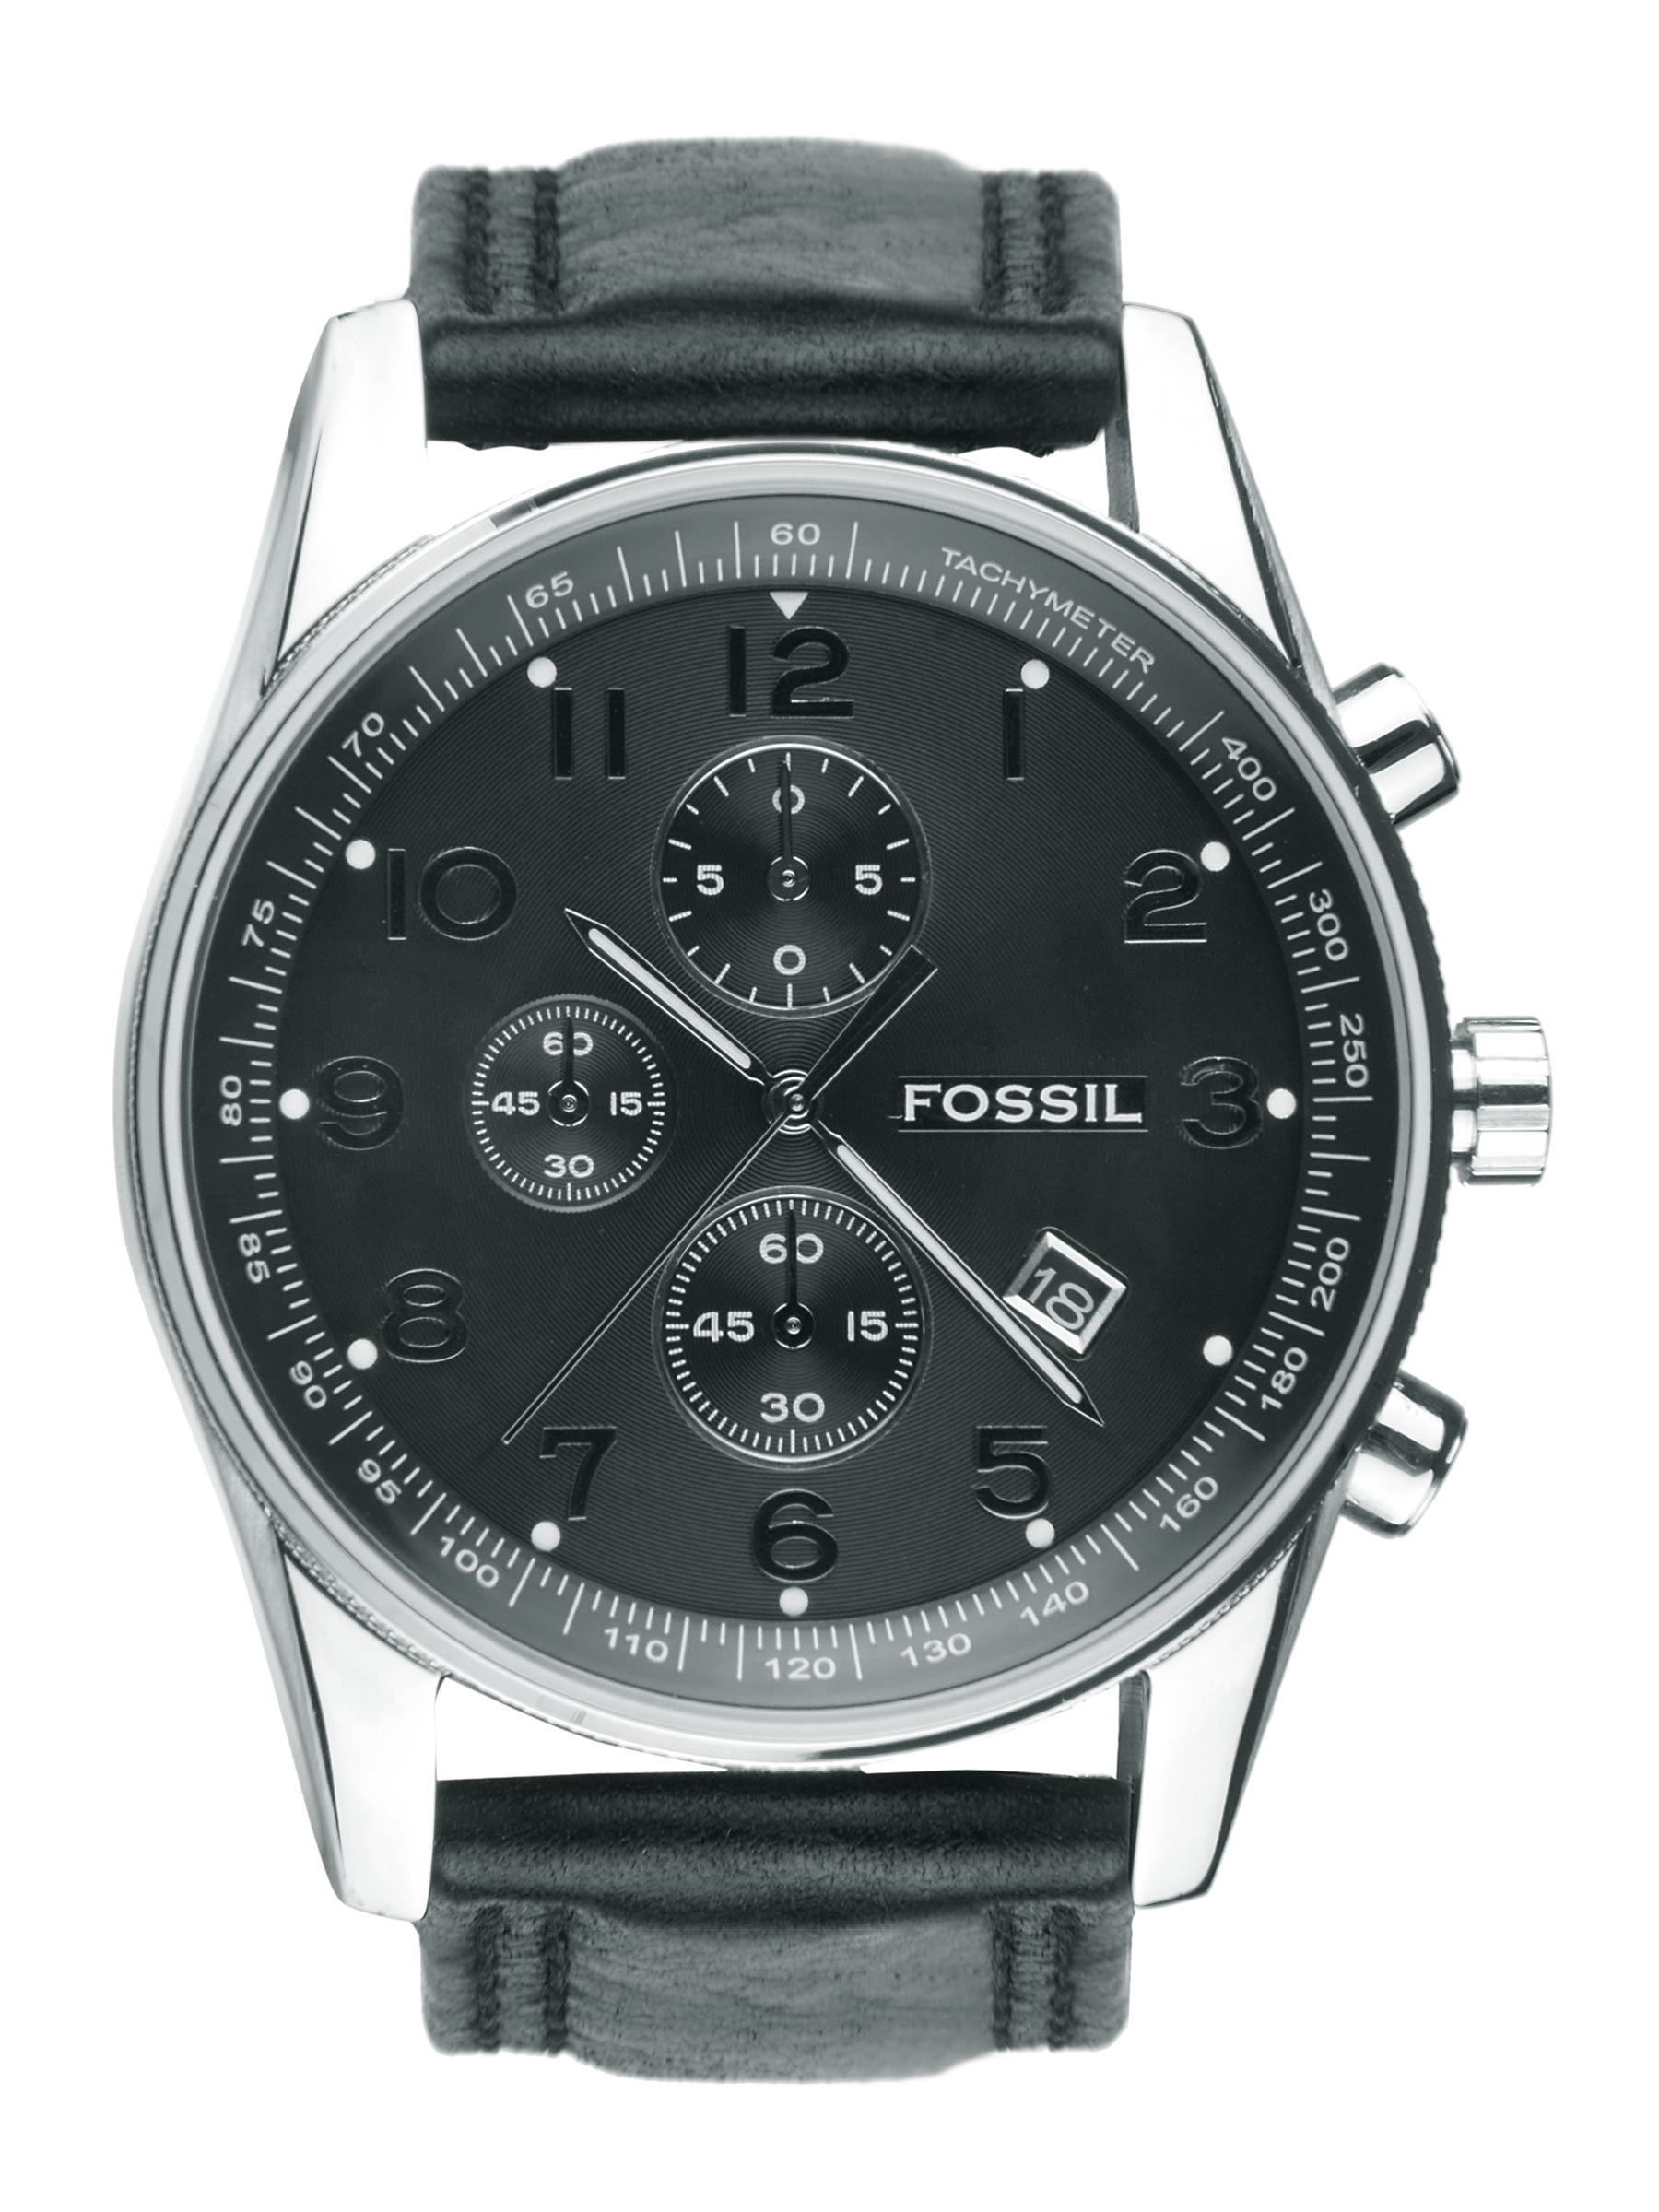 Fossil Men Black Dial Chronograph Watch FS4310